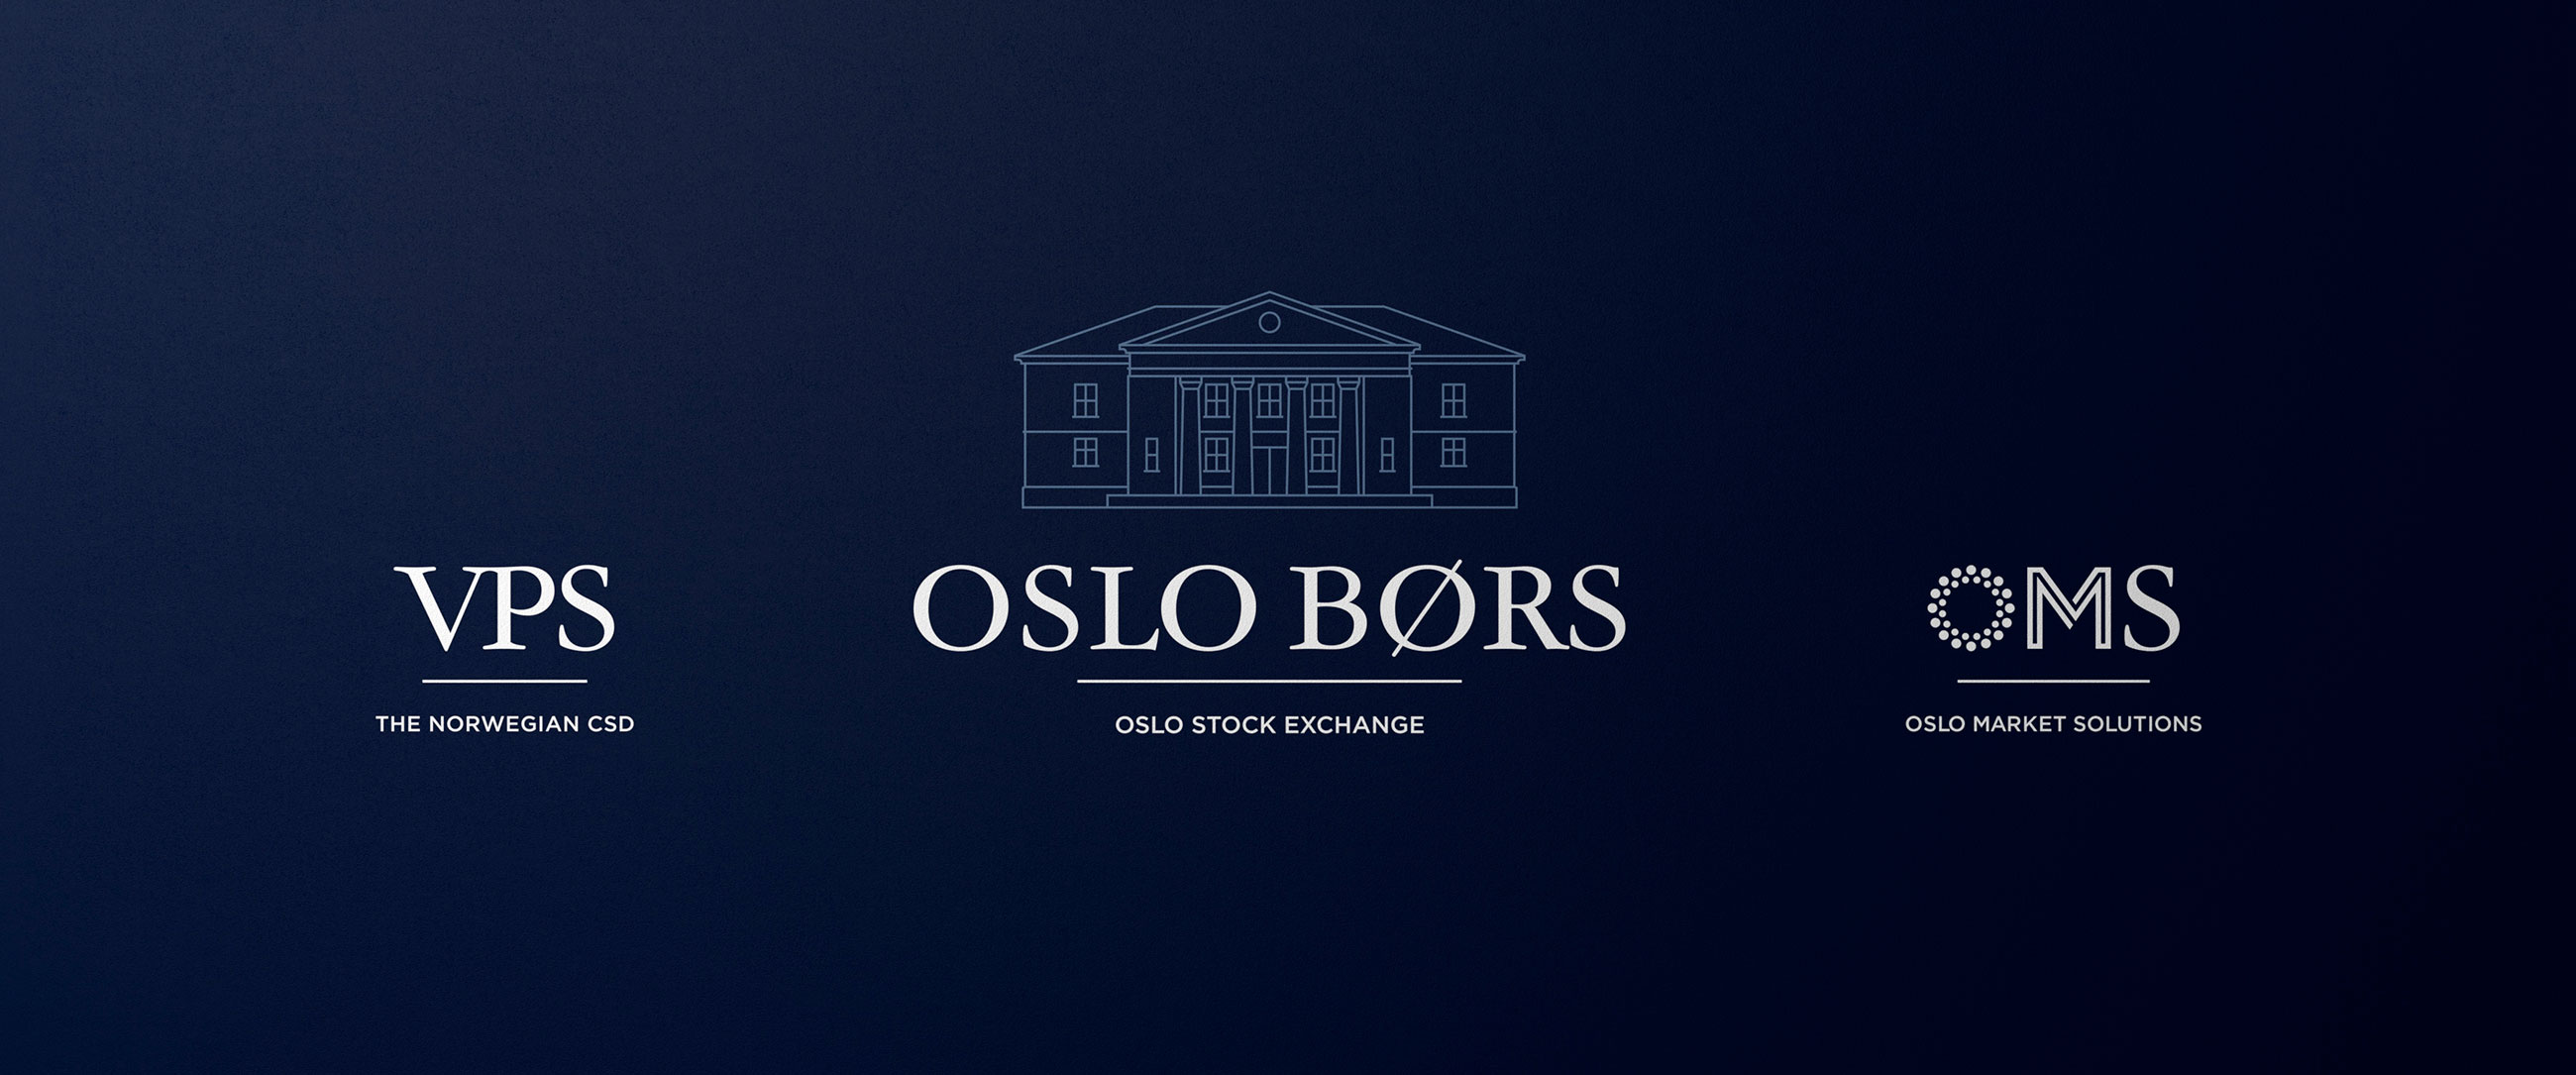 Oslo børs stock market OMS VPS logo. Visuell identitet visual identity.